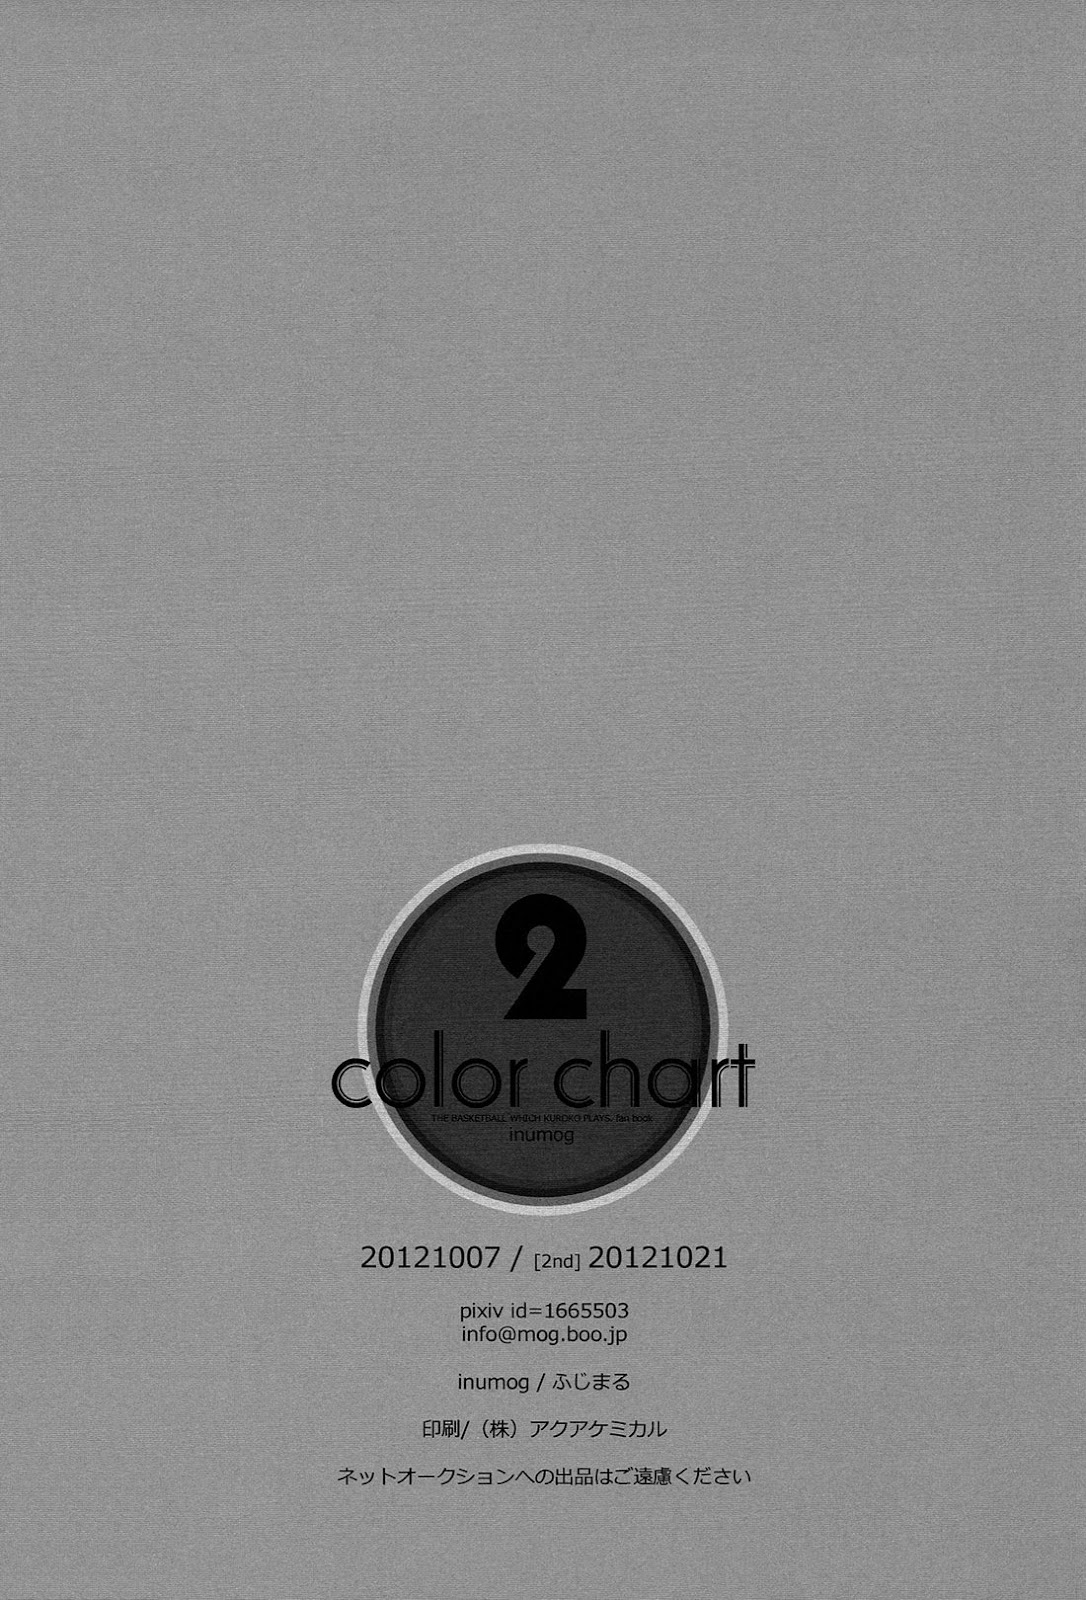 [Kuroko no Basuke DJ] Color Chart 2 1 21